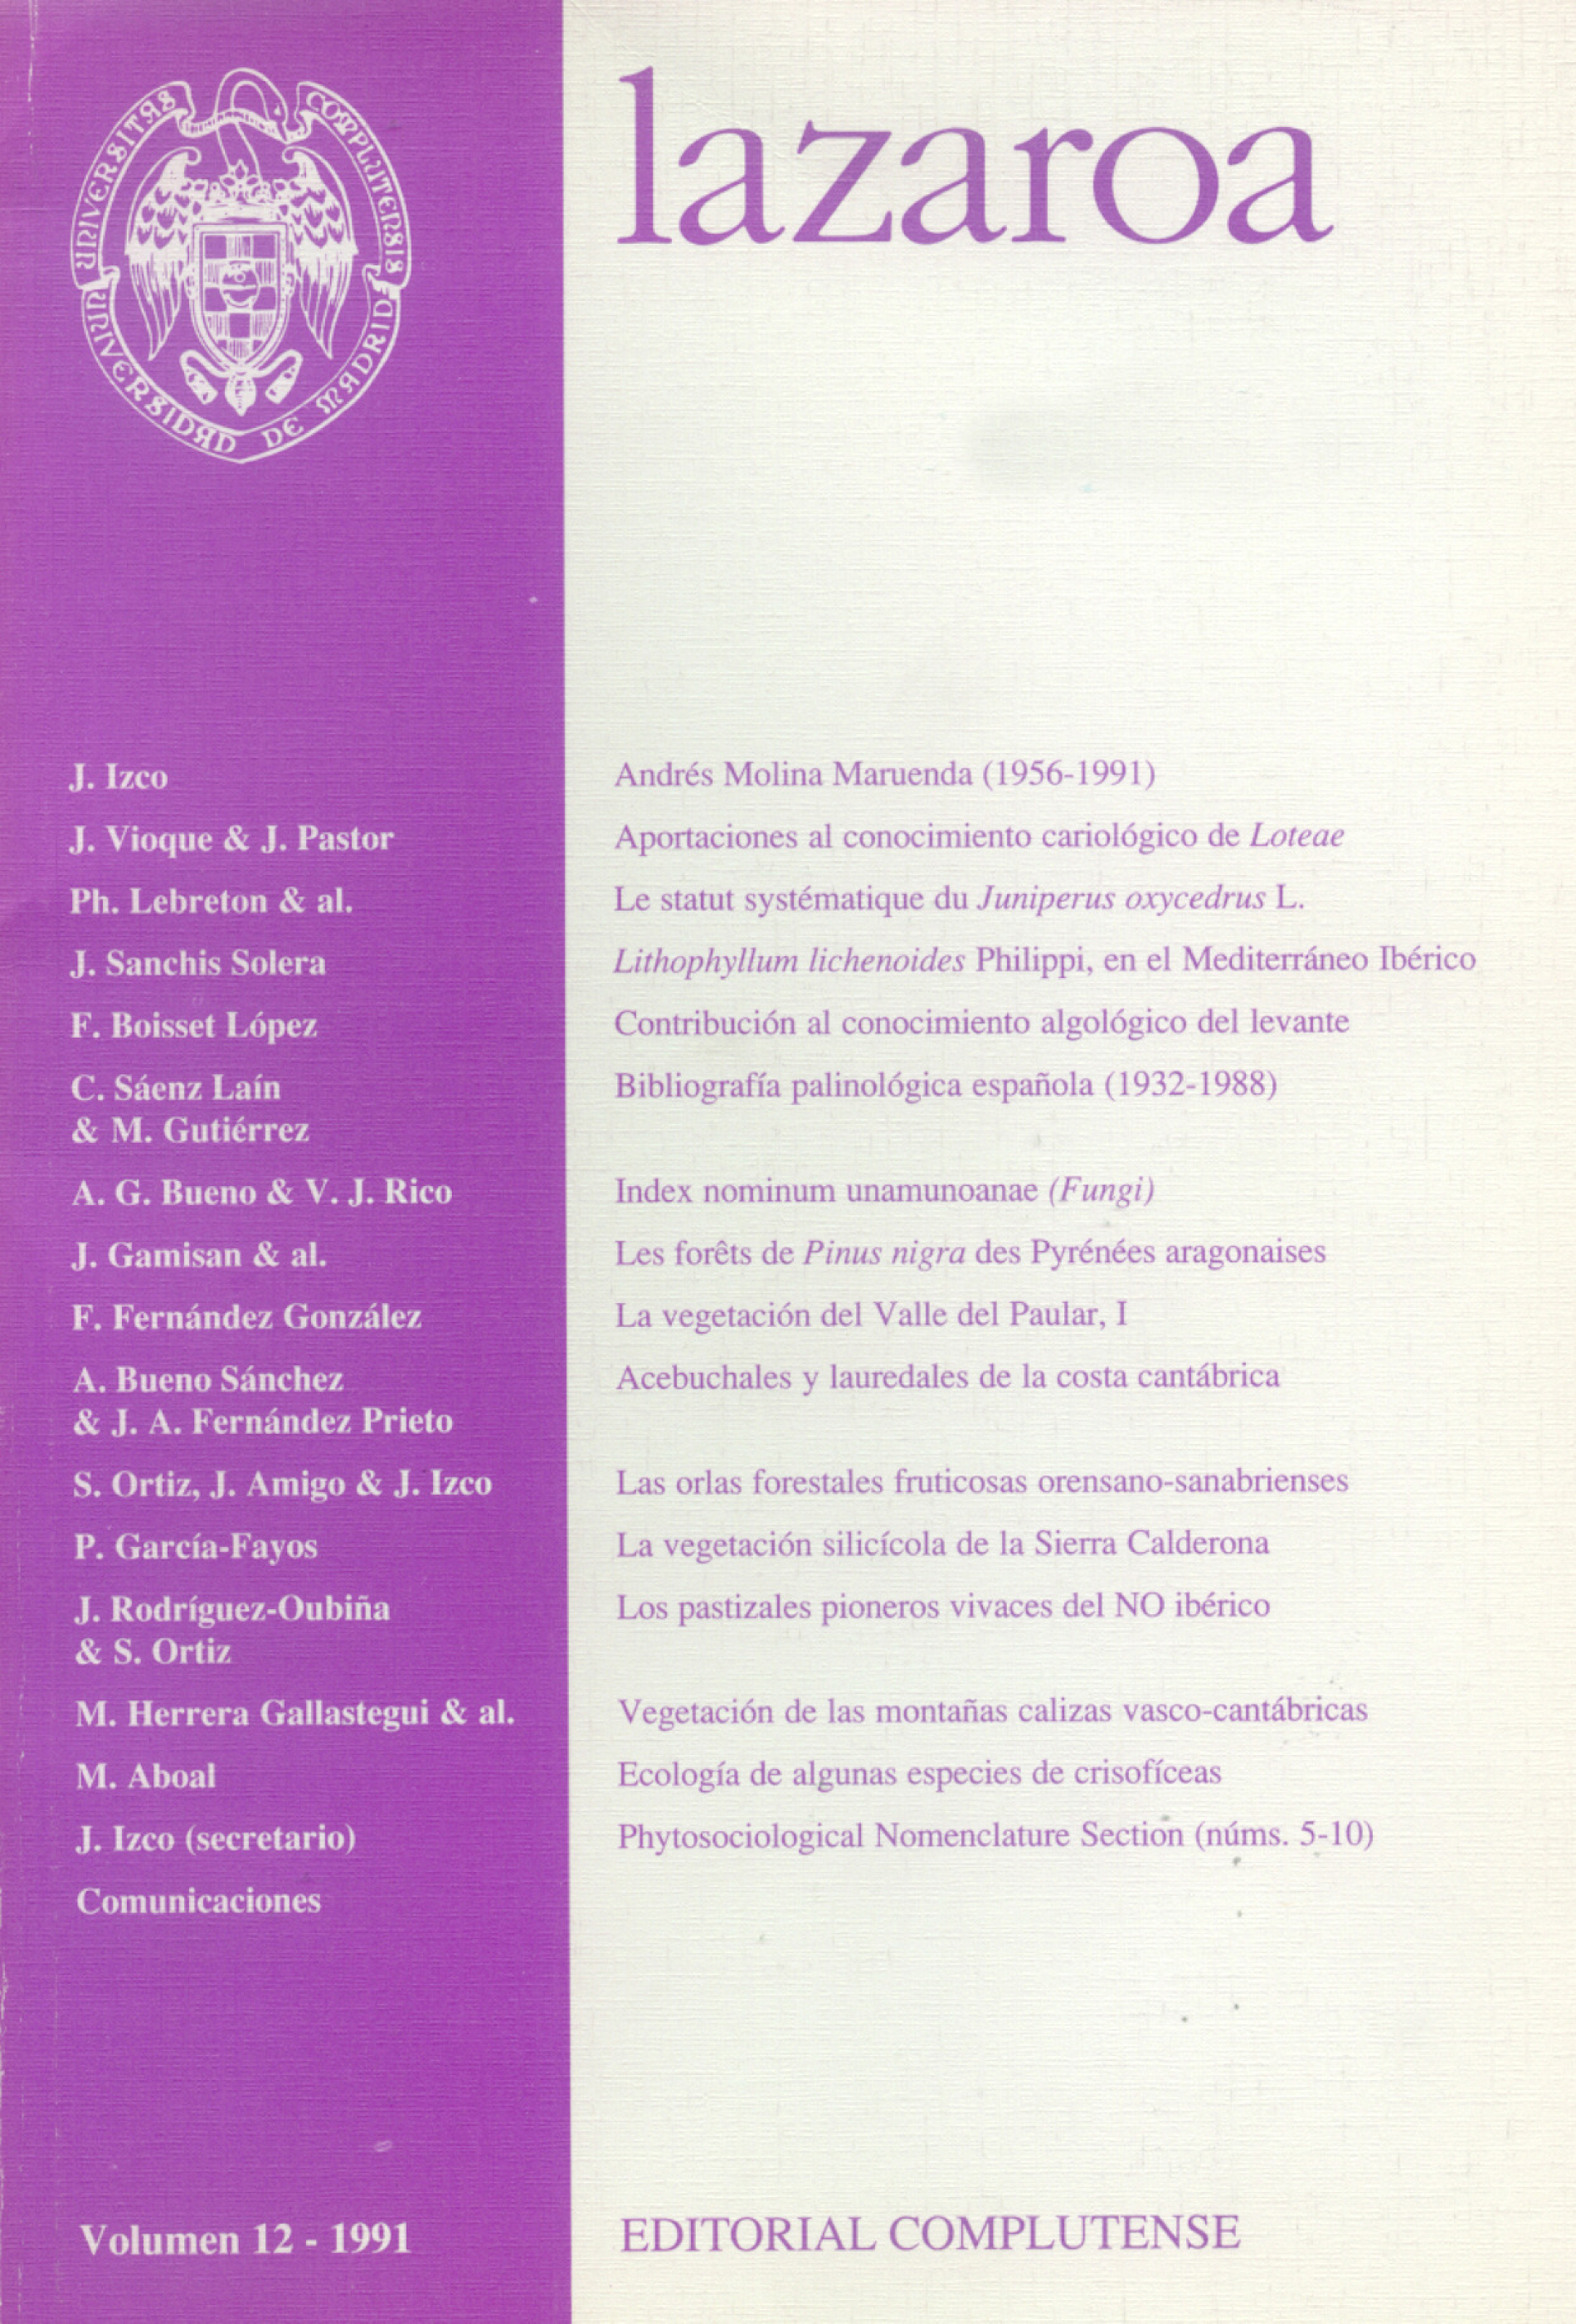 					Ver Vol. 12 (1991)
				